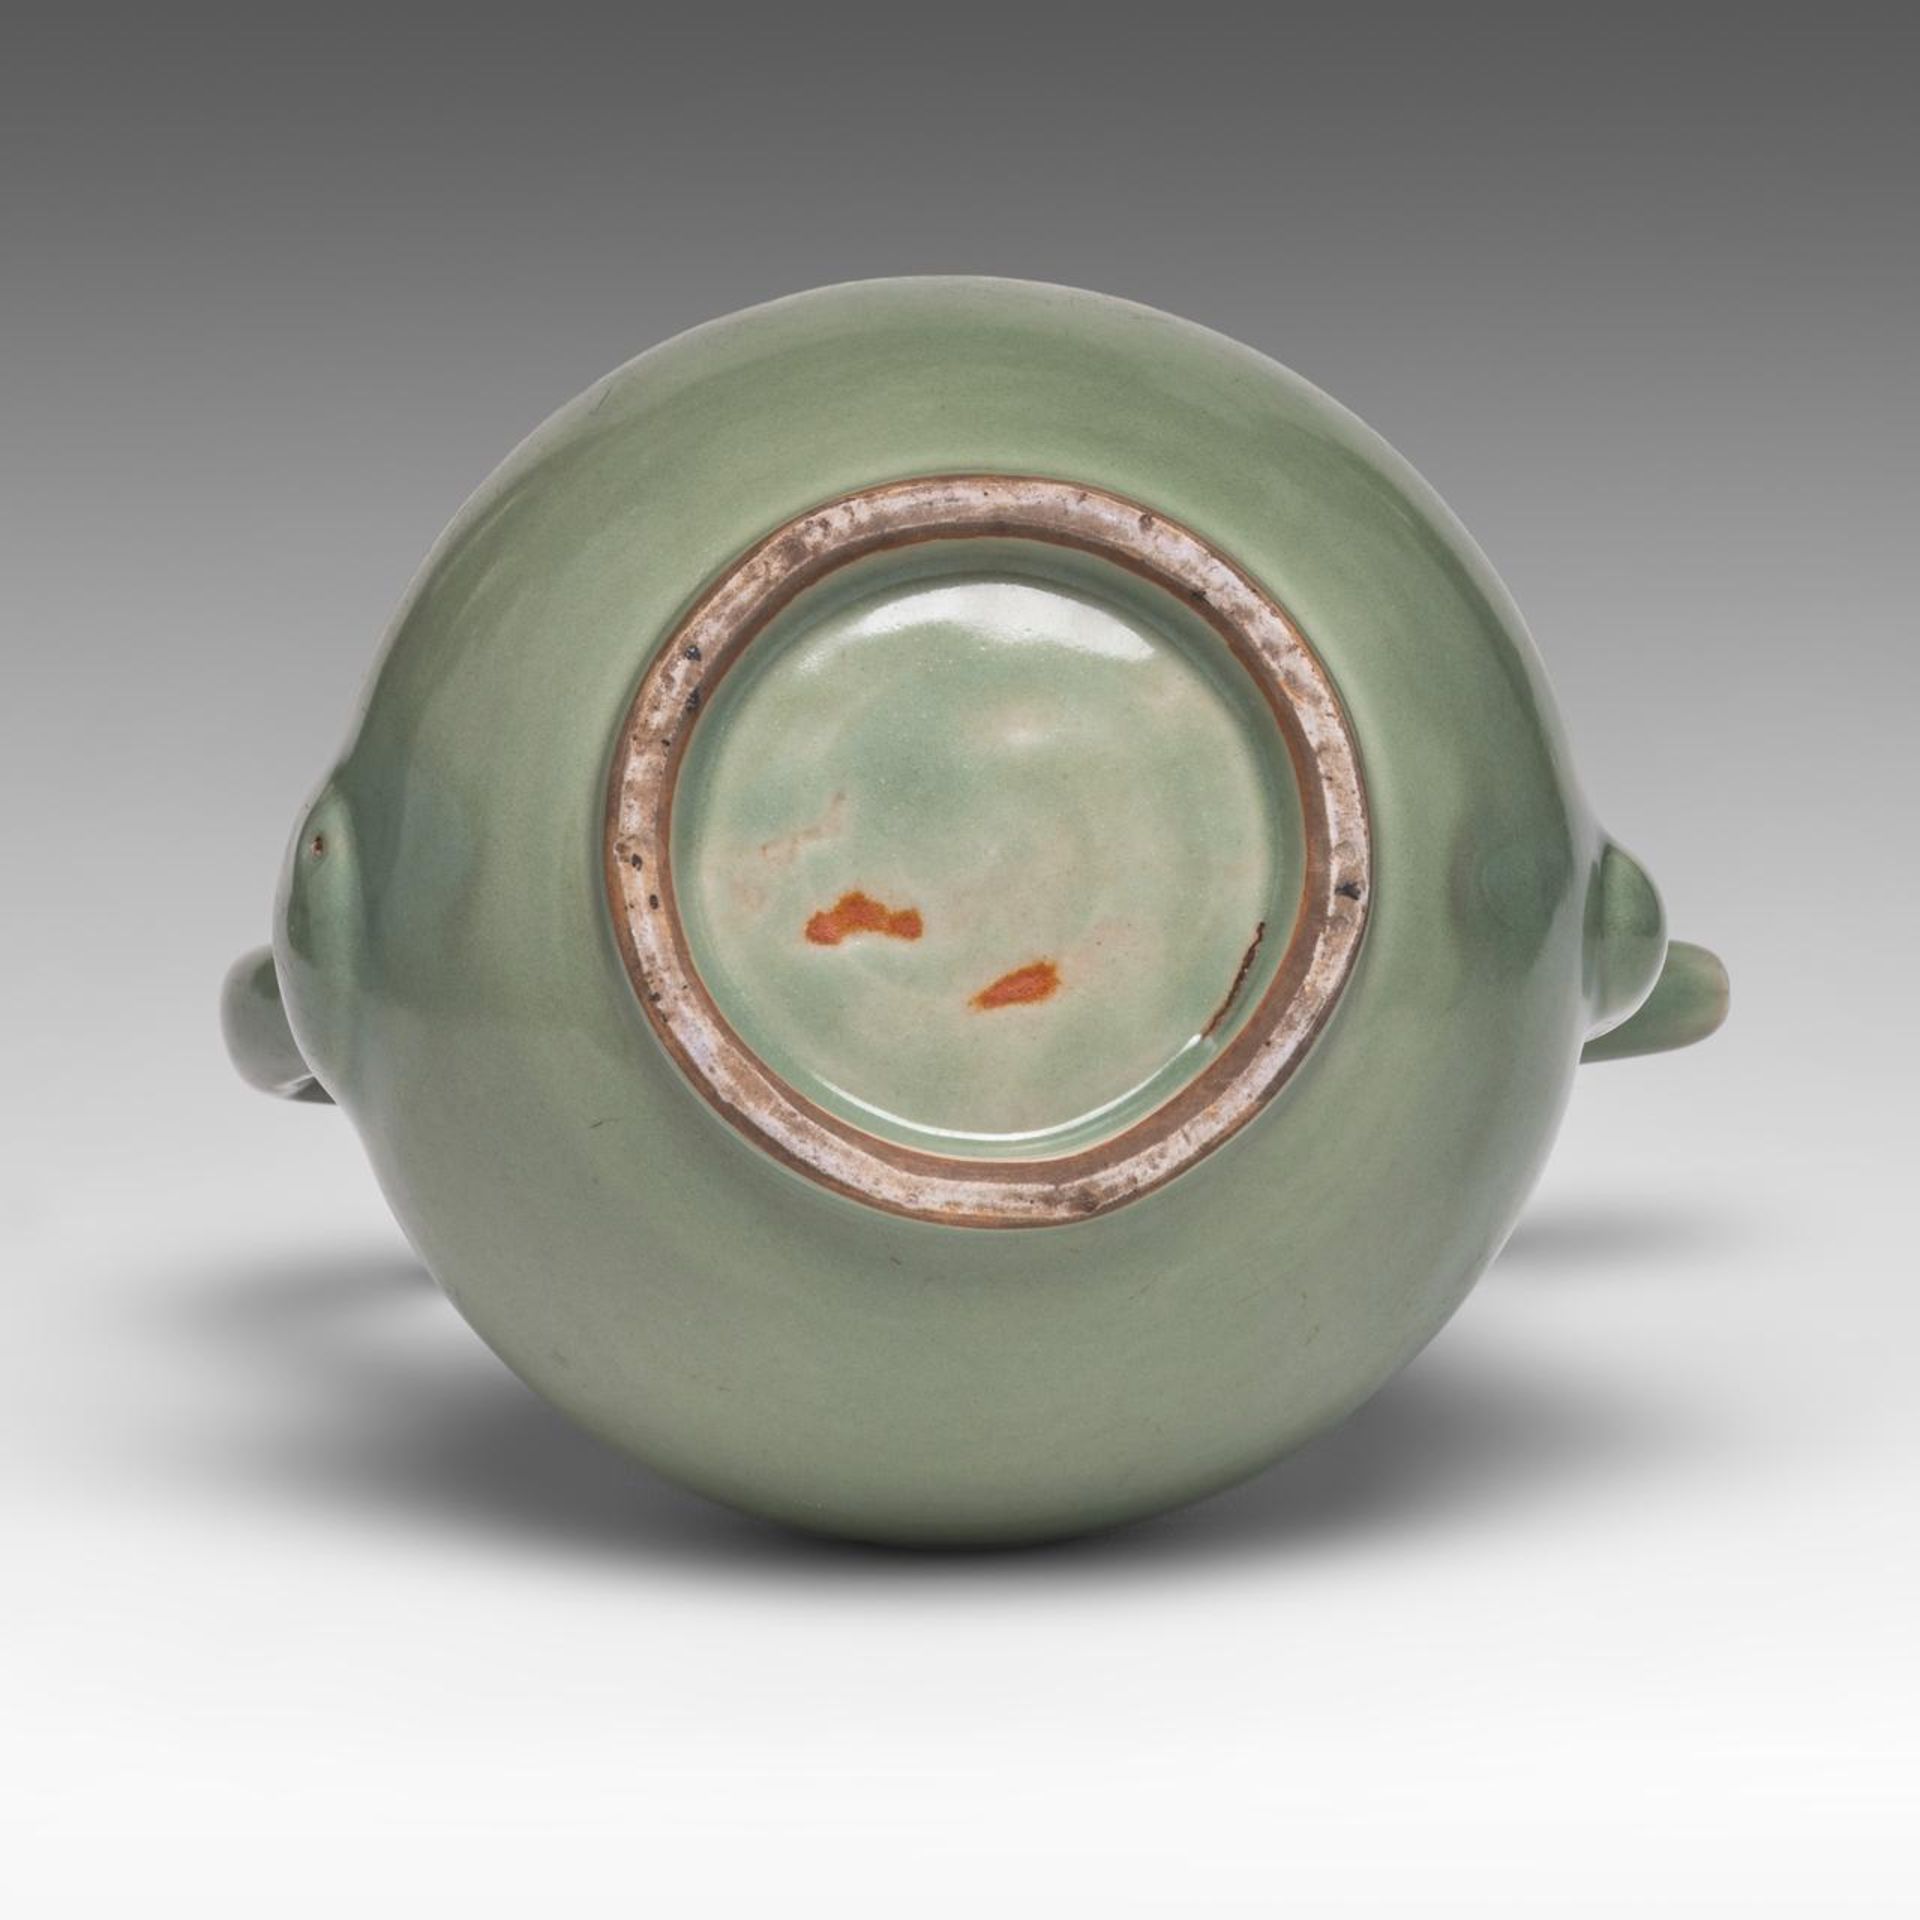 A Chinese Longquan celadon ewer, incl. a tomobako (Japanese wood box), H 33 - W 27 cm (ewer) - Image 6 of 7